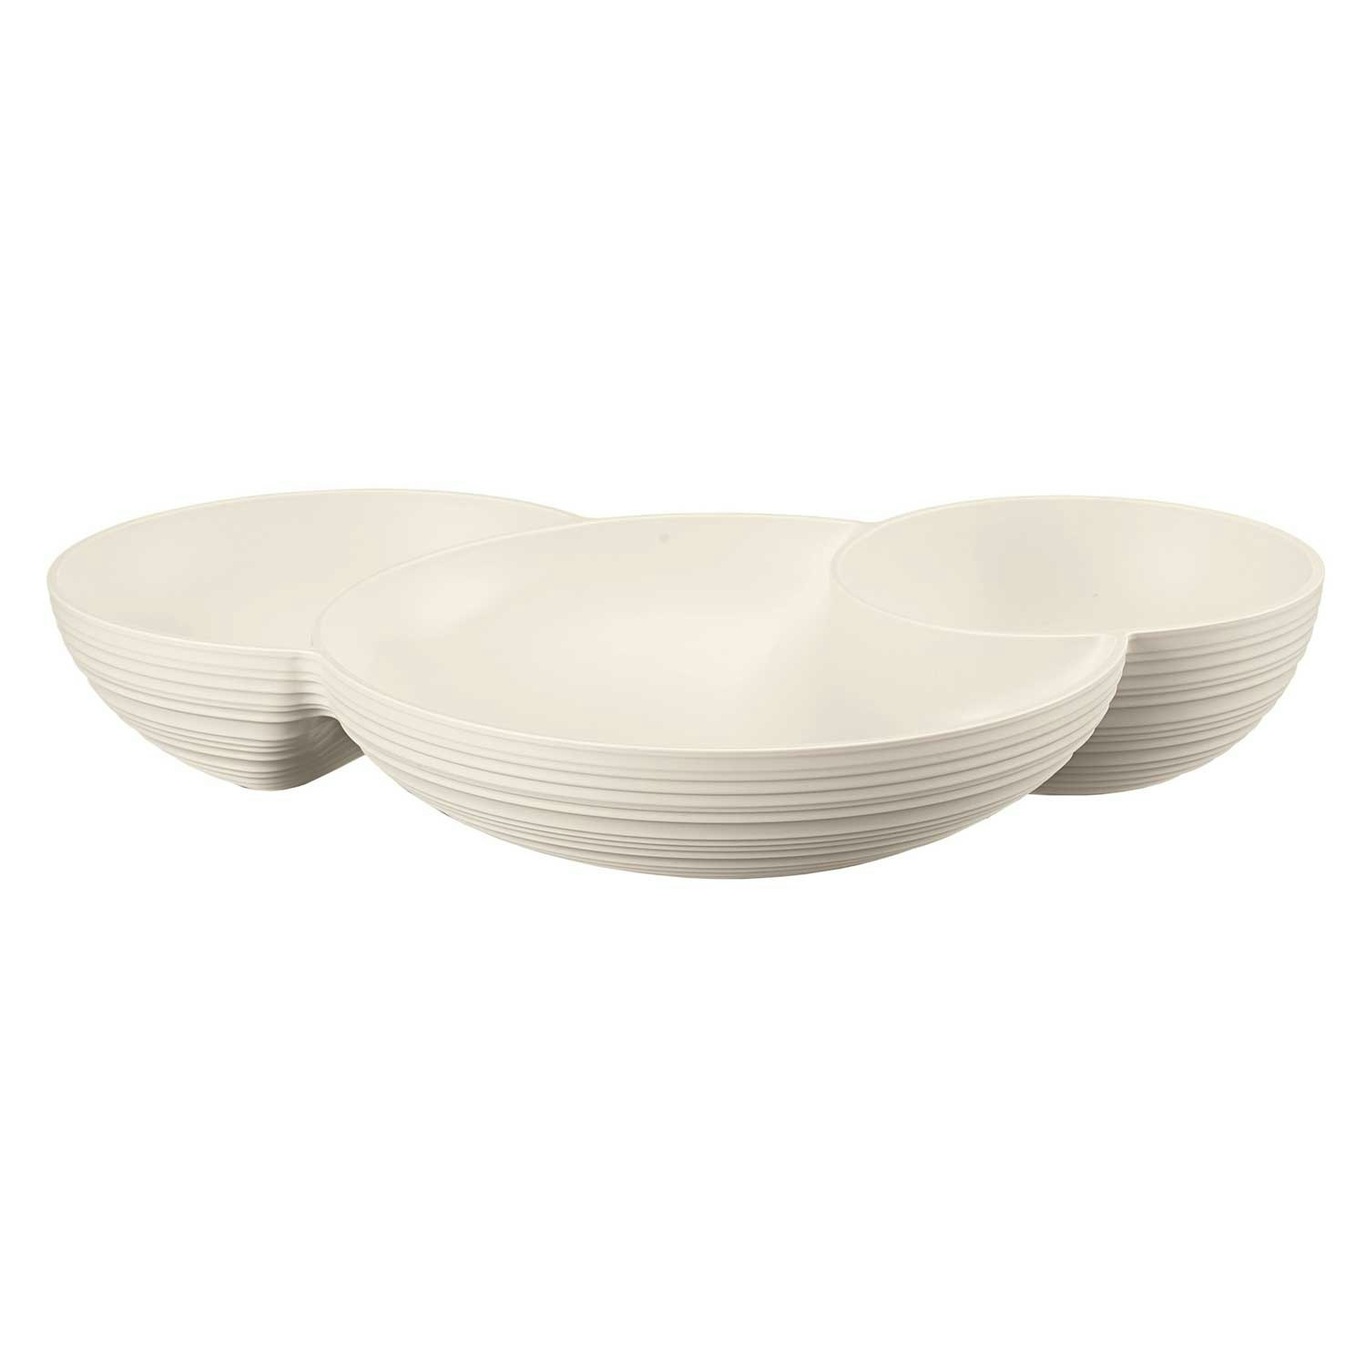 Tierra Bowl 29,5x21,4 cm, White - Guzzini @ RoyalDesign